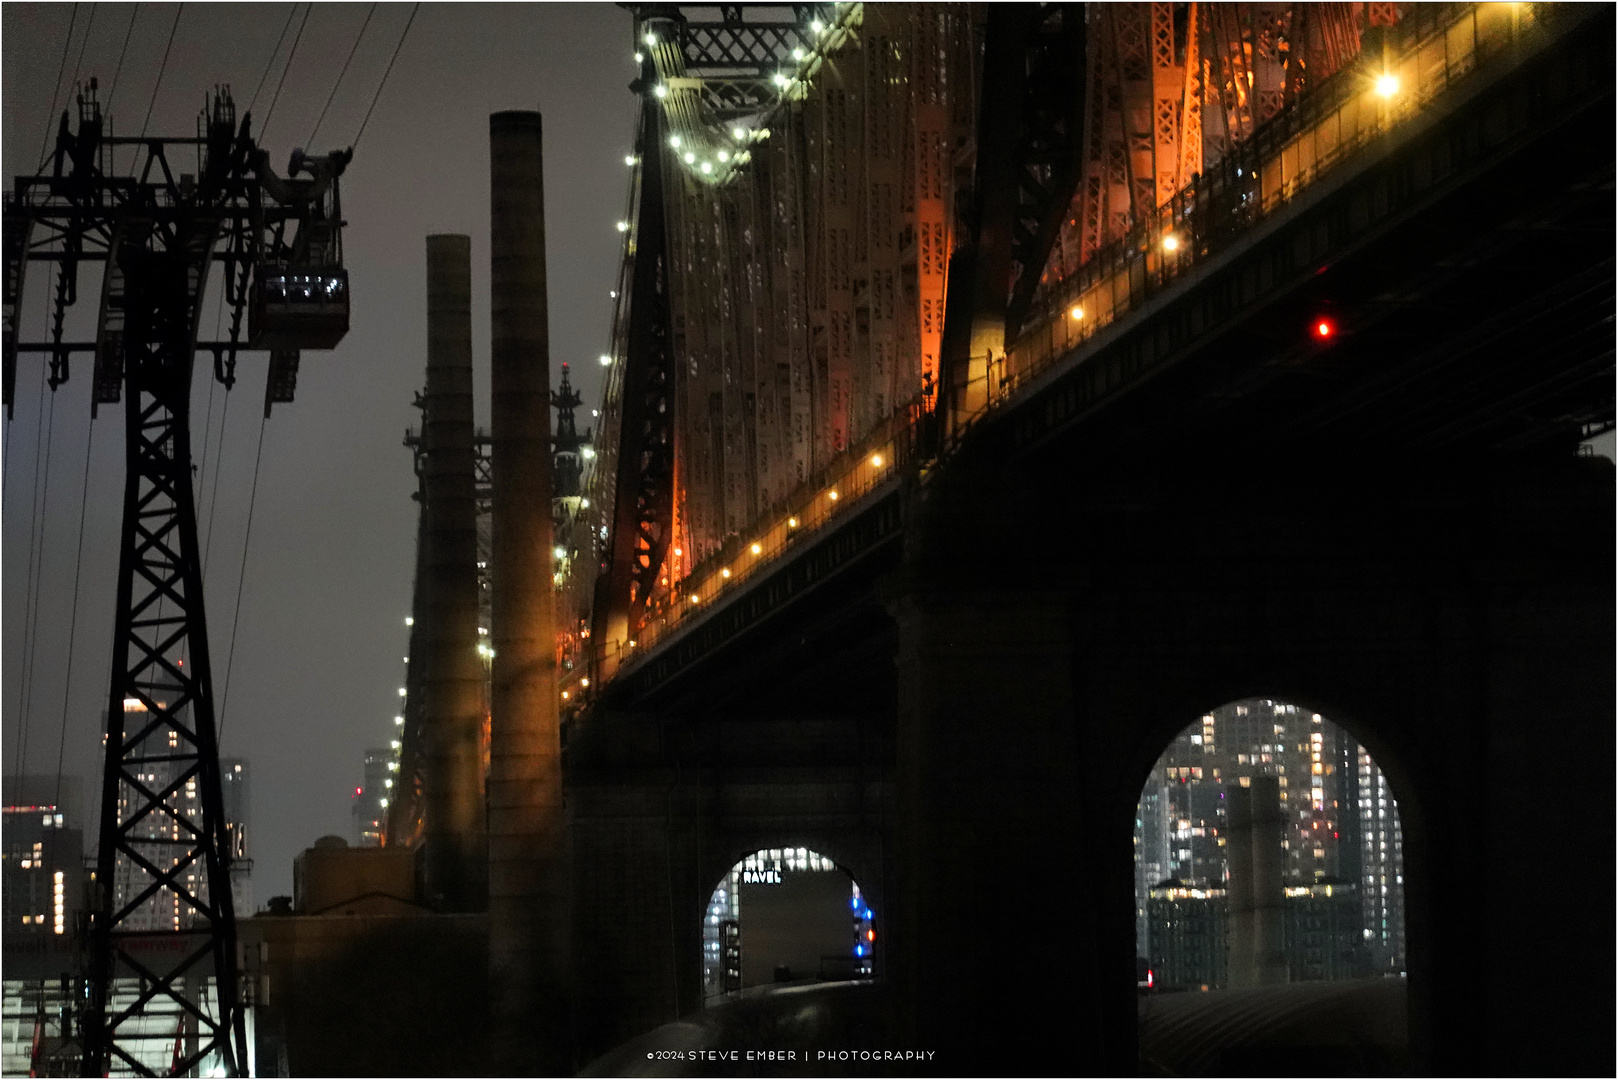 Nocturnal Bolero - An East River Impression